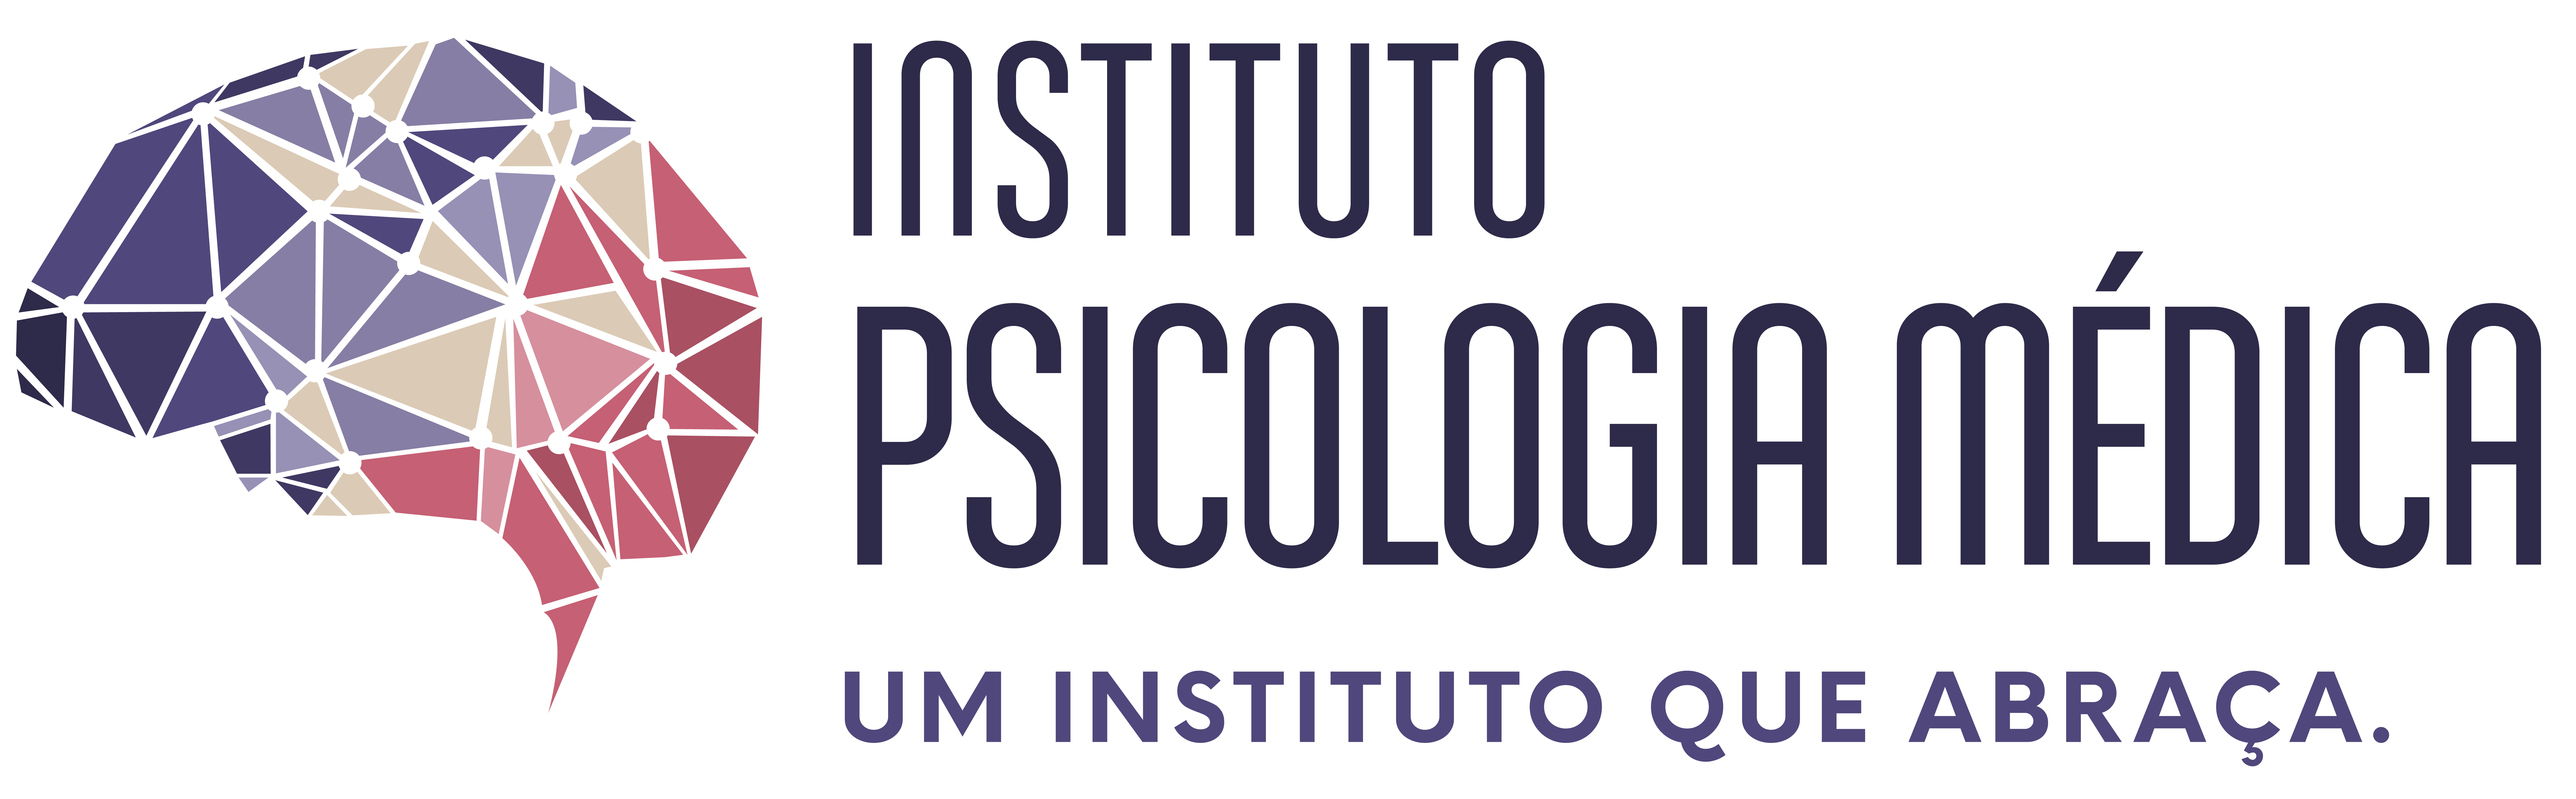 Instituto de Psicologia - Por que estudar a Psicologia das